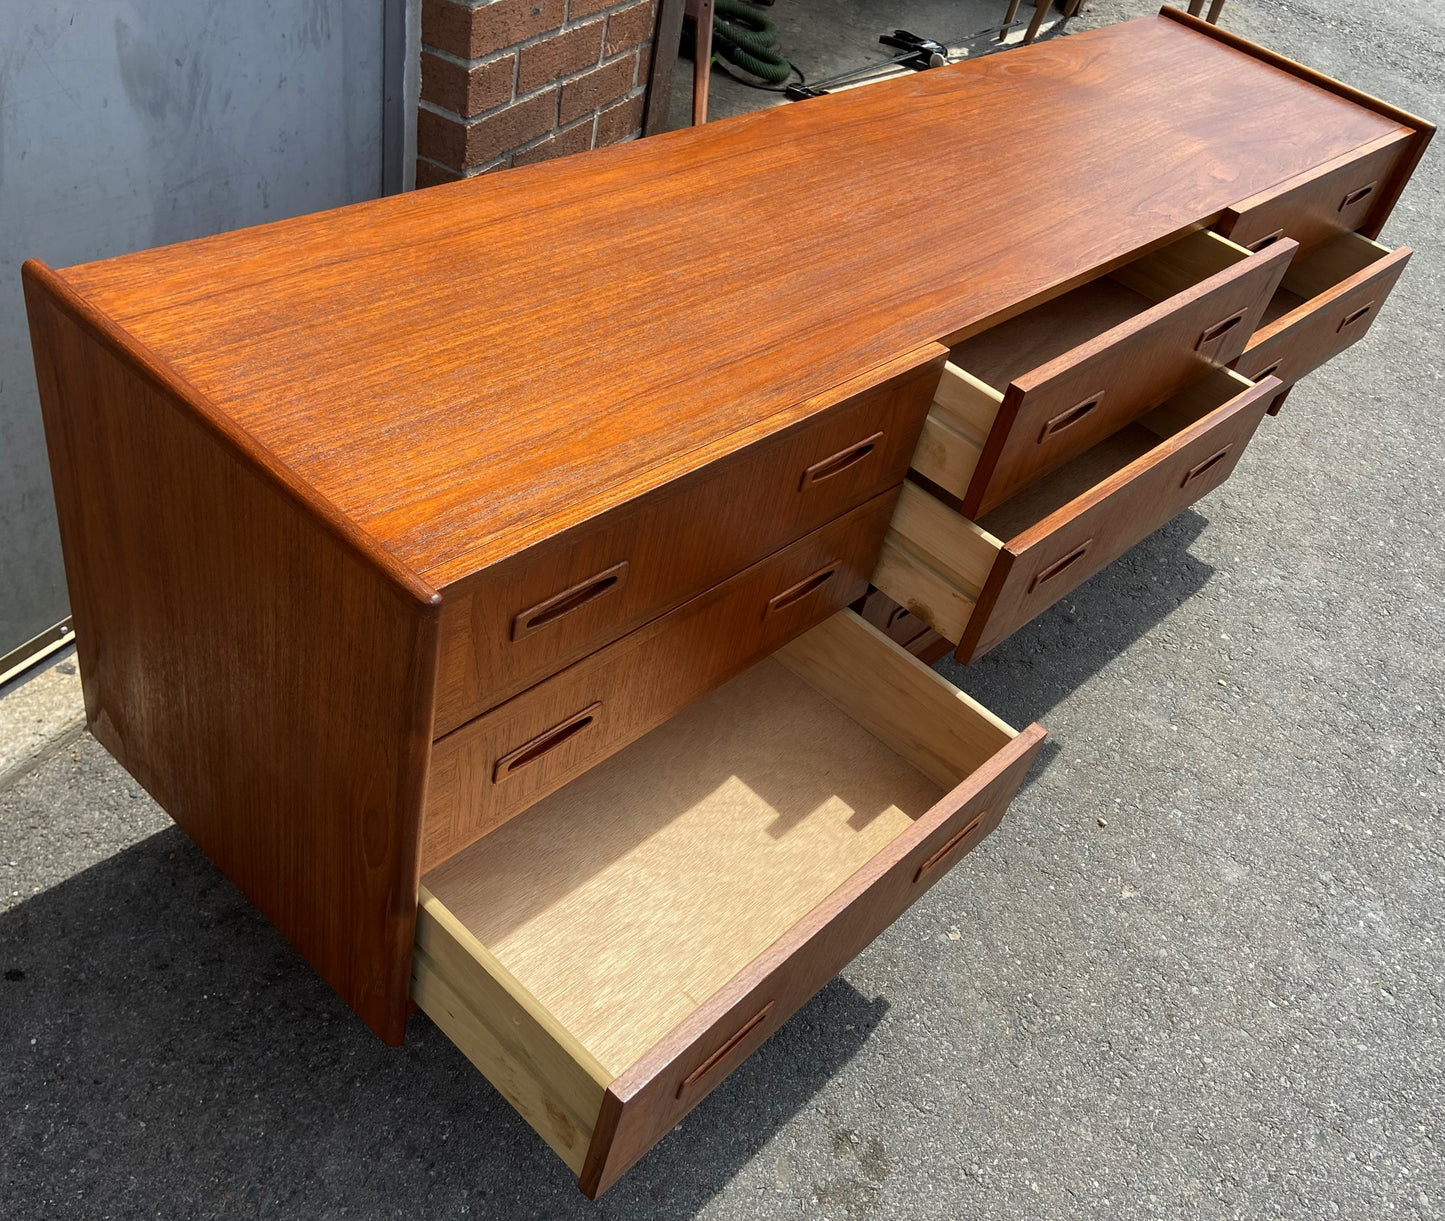 REFINISHED Mid Century Modern Teak Dresser 9 drawers, SUPER SALE